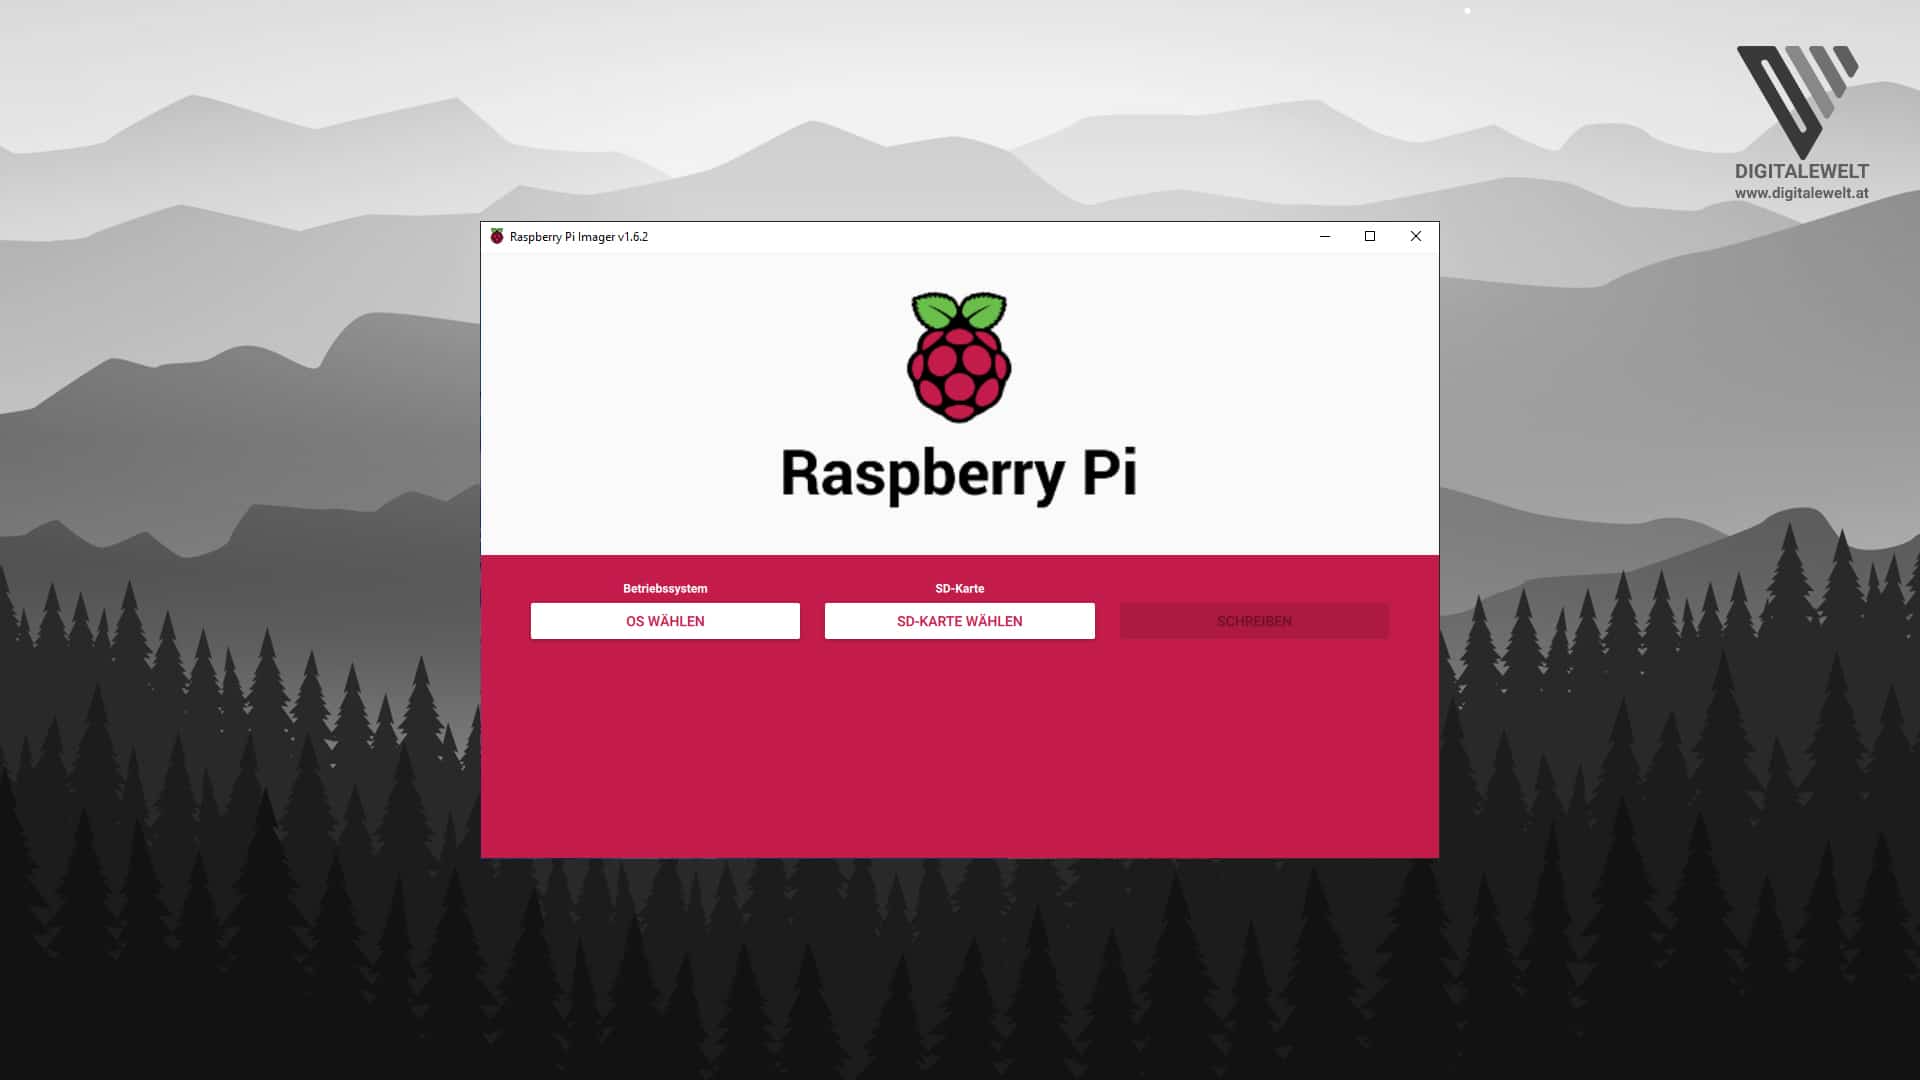 Raspberry-Pi-WLAN-SSH-Raspberry-Pi-Imager-digitalewelt.at_